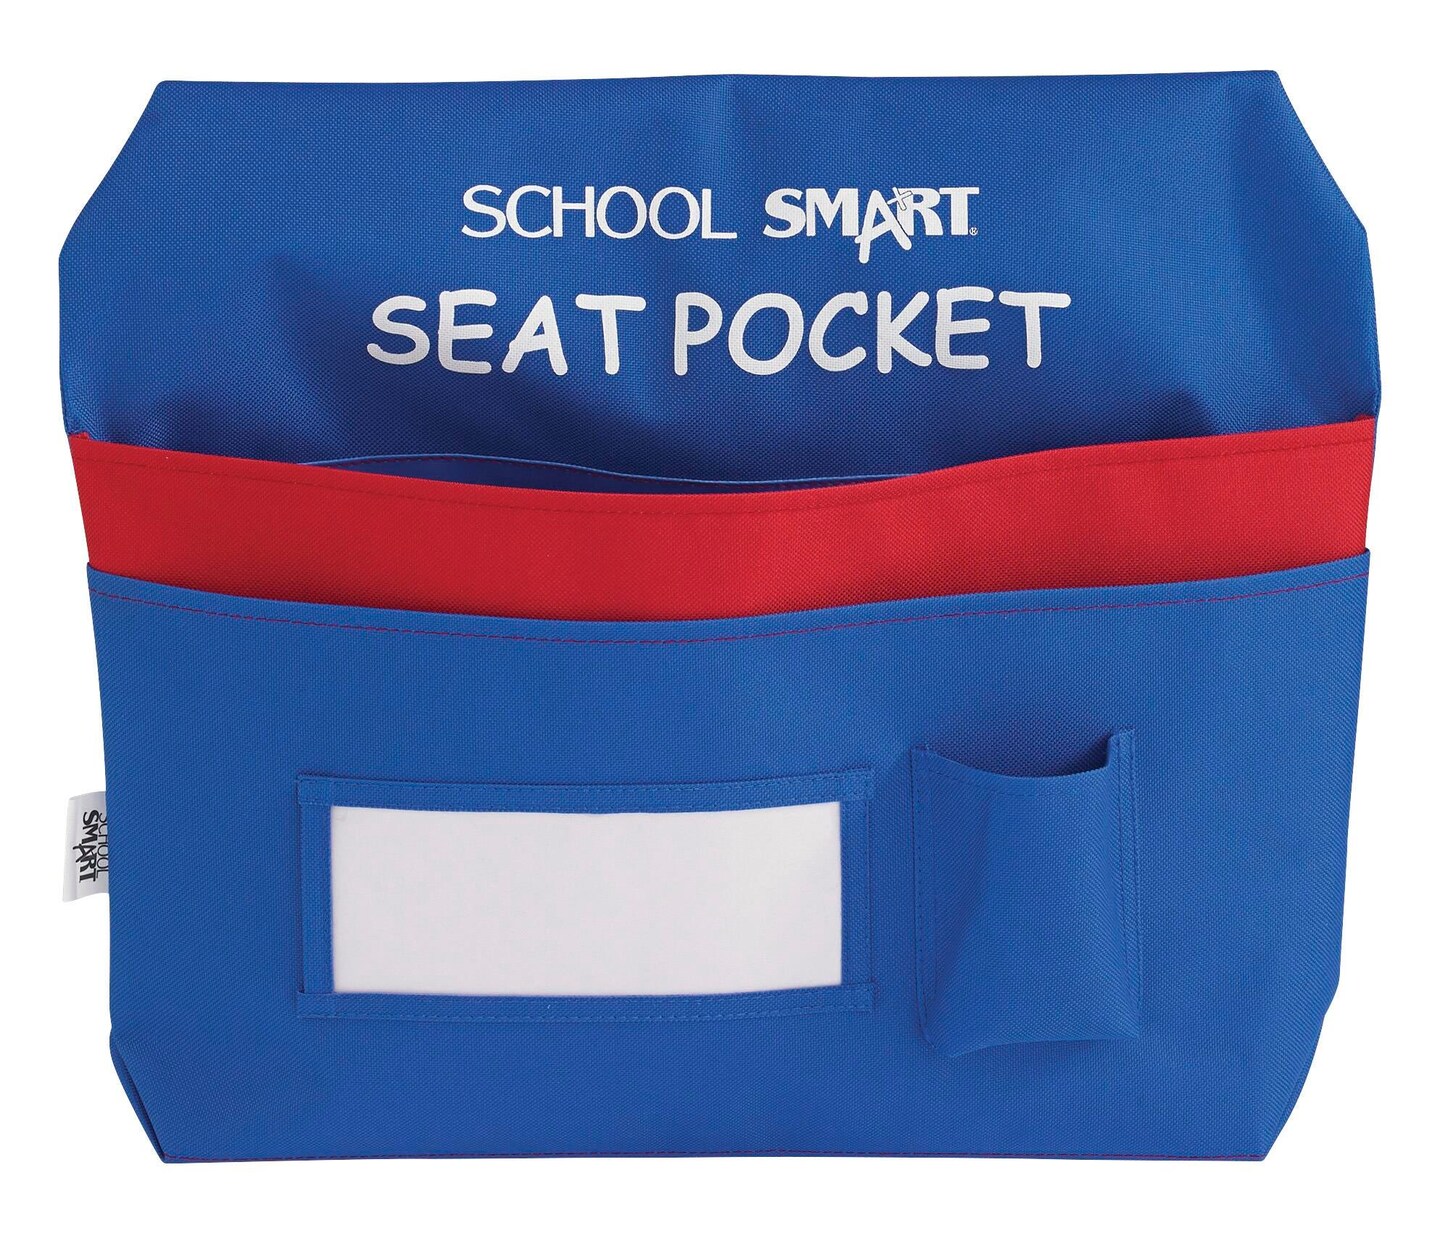 School Smart Seat Pocket, 17 x 14-1/2 Inches, Blue